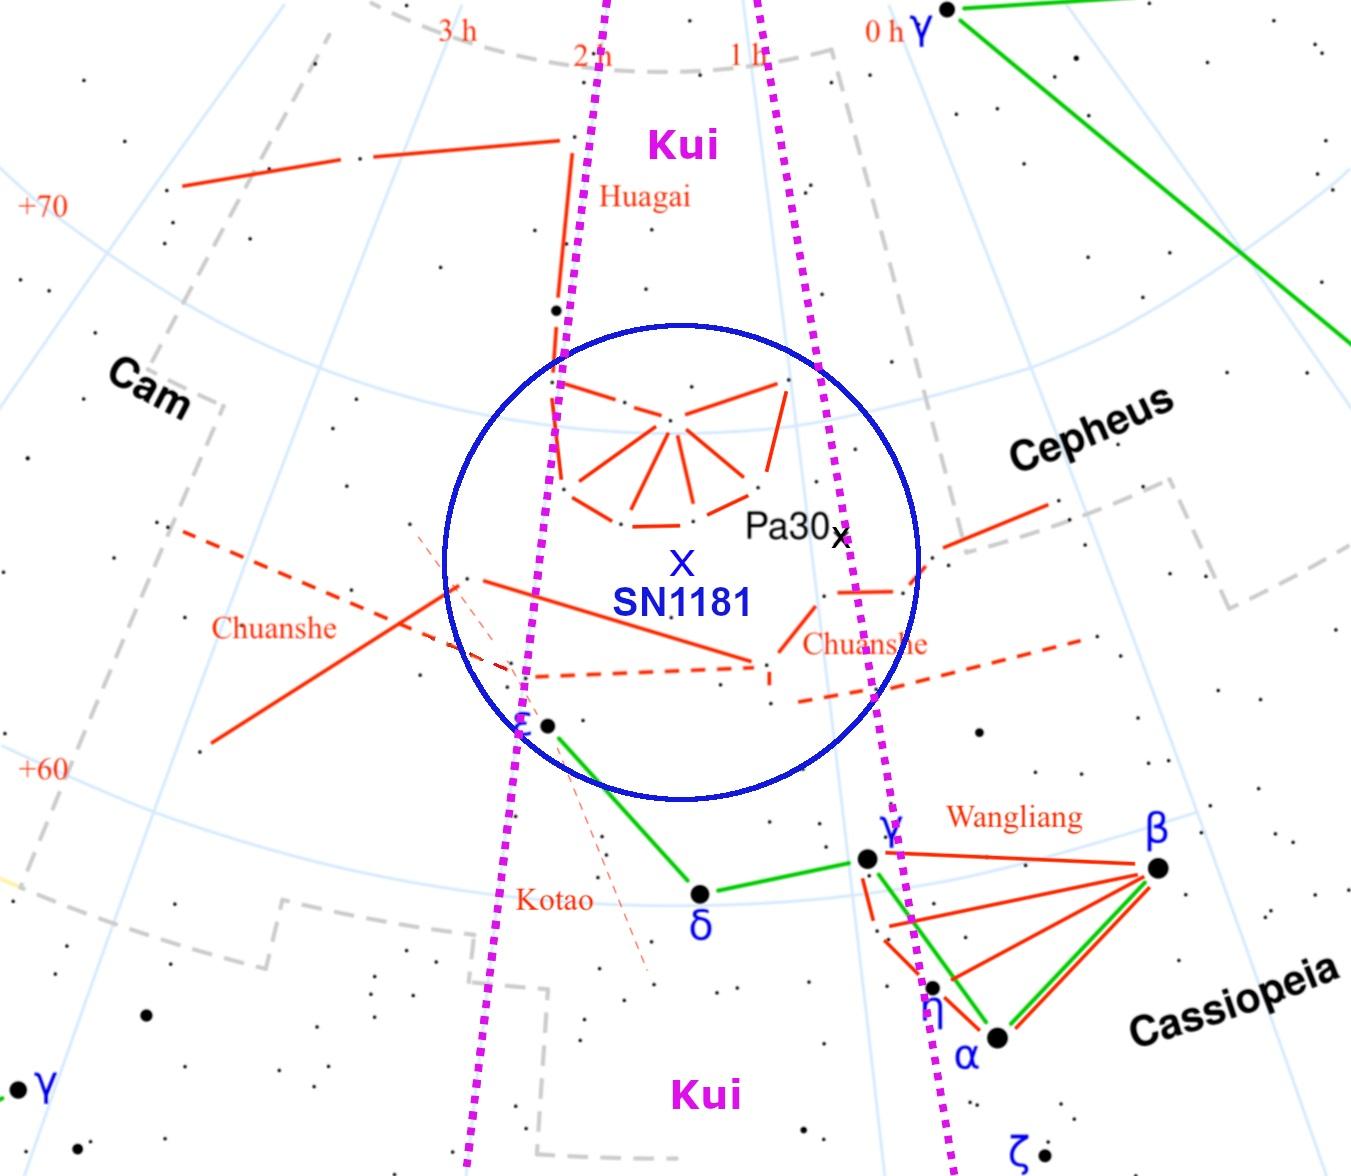 SN 1181 的区域，红线表示中国星群。 Pa30 的位置用黑色十字表示。绿线表示现代星座仙后座。据说这颗超新星位于王梁附近的华盖和川社之间的中国“月球小屋”奎（两条紫色虚线之间）。 SN 1181 的最佳估计平均位置由一个蓝十字给出，周围是一个半径为 5 度的蓝色误差圆。